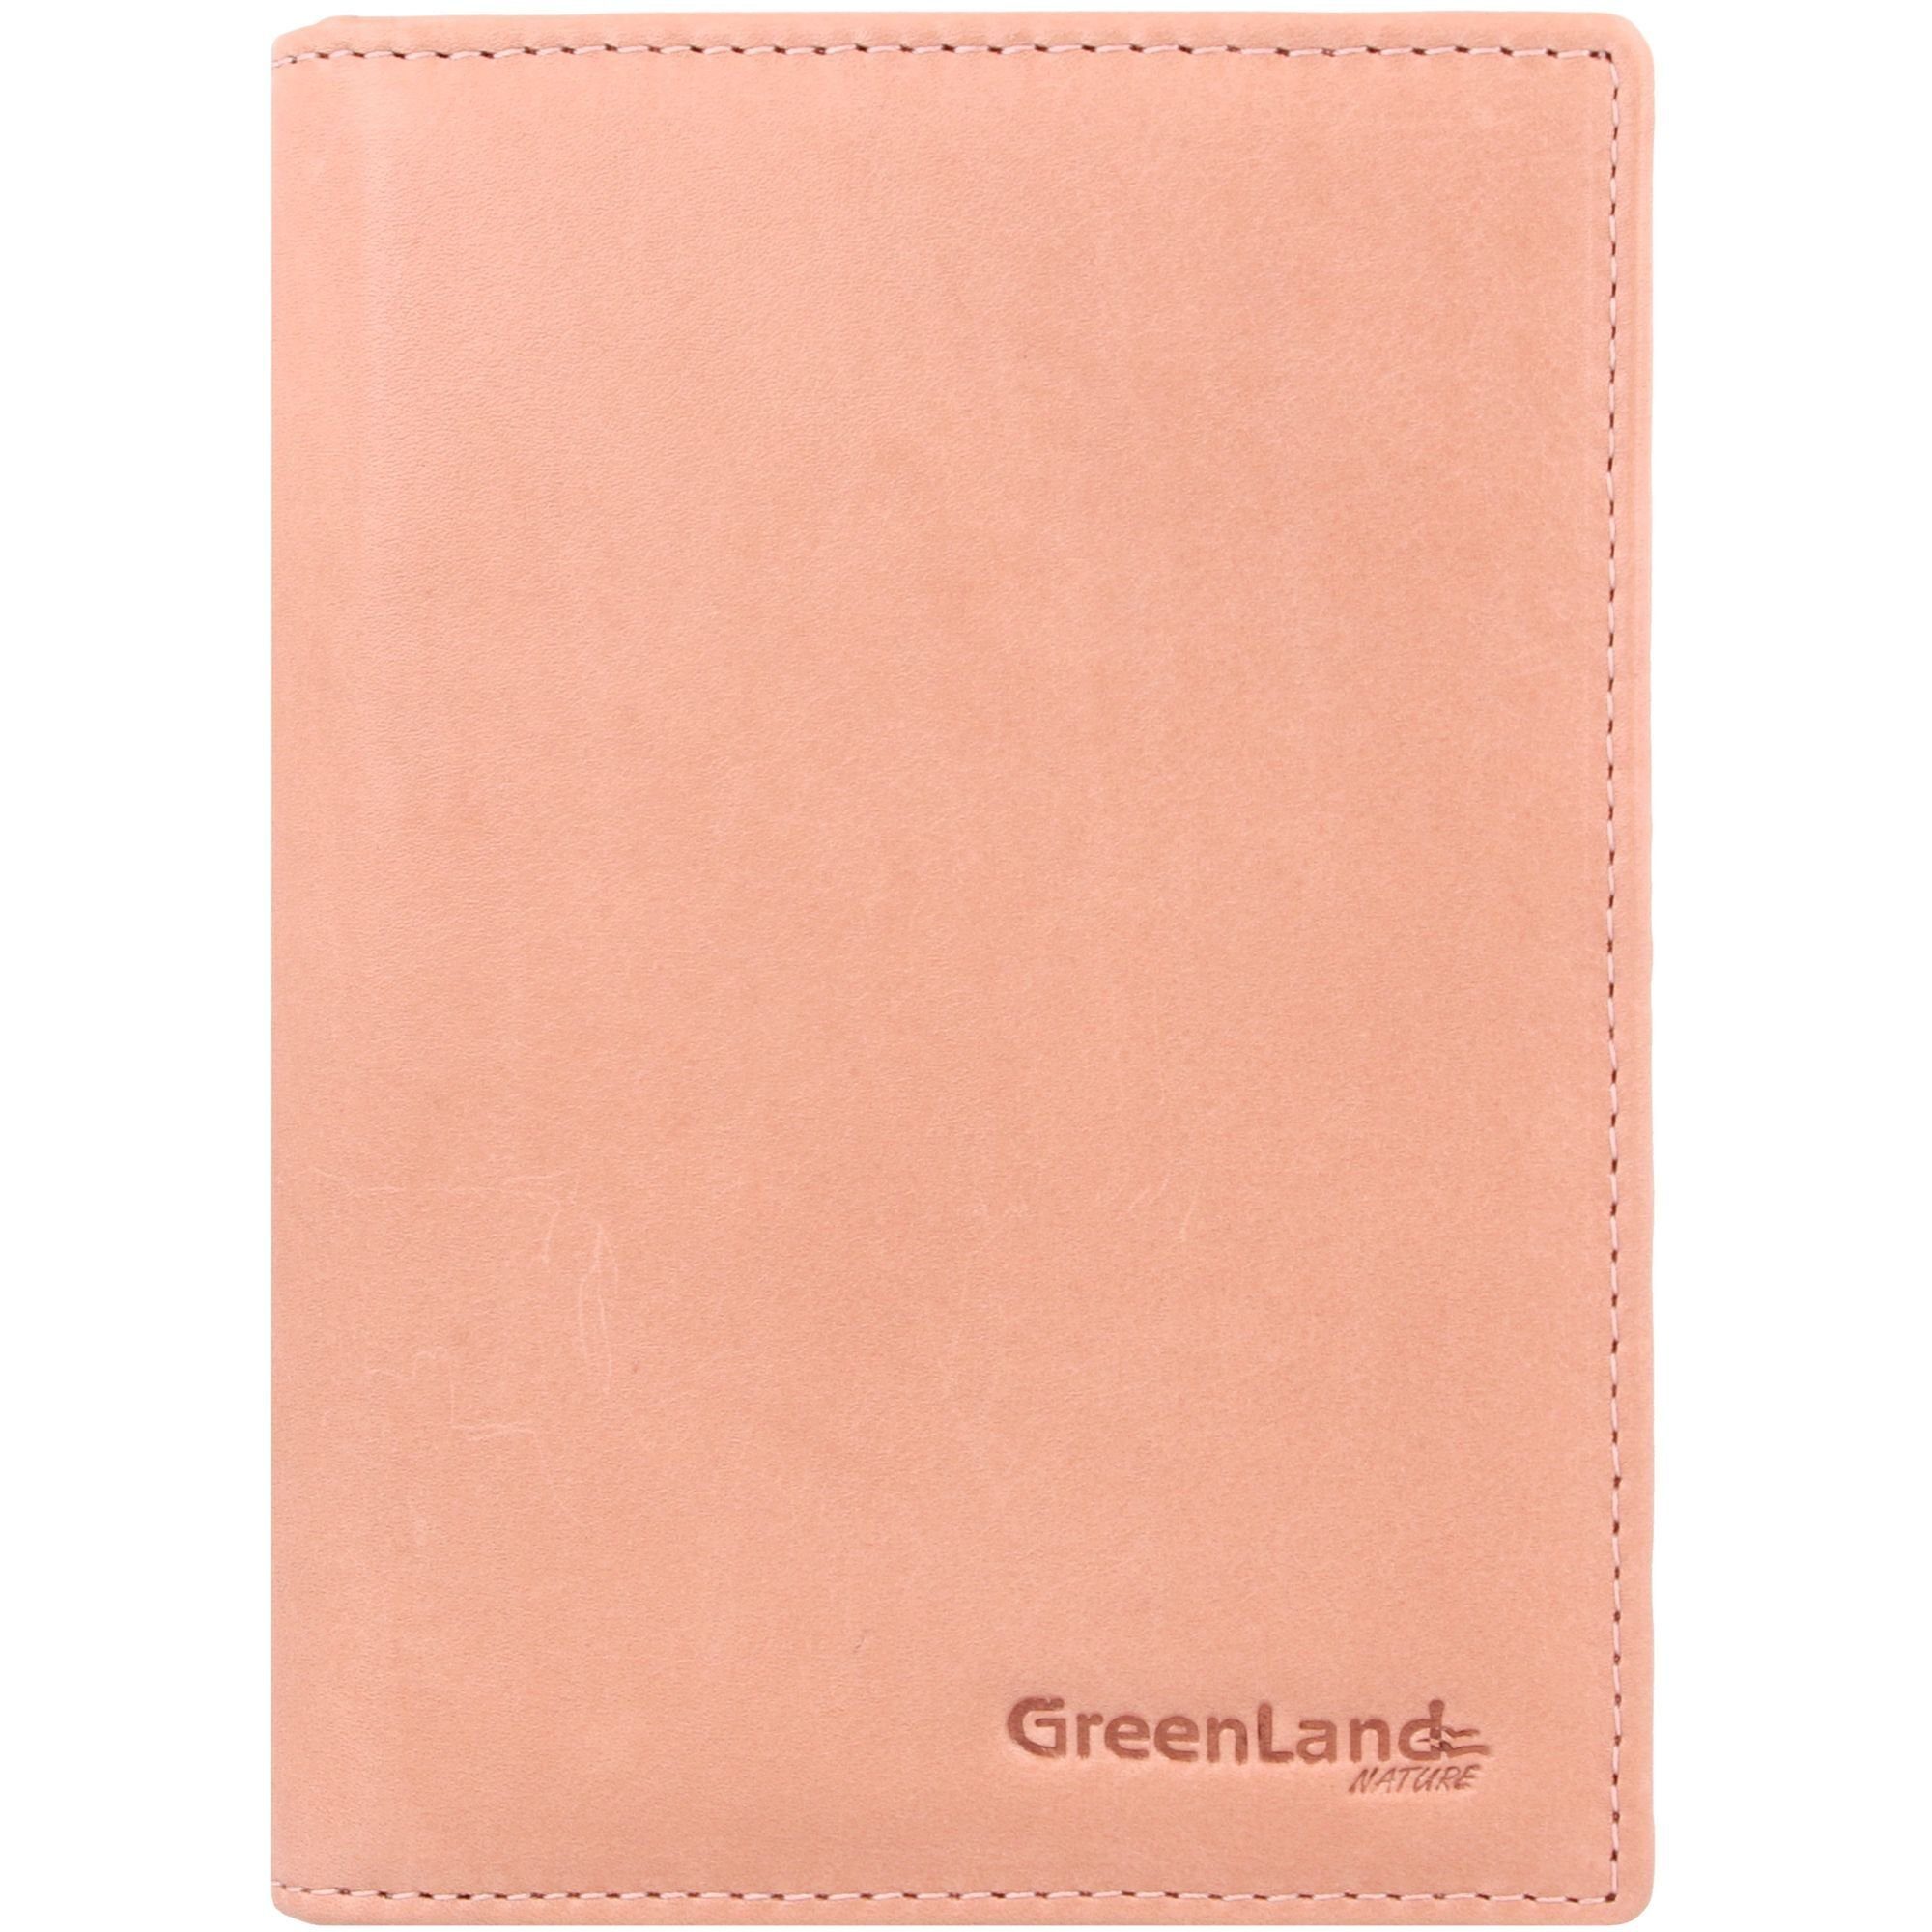 GreenLand Nature Etui Colour, Soft flamingo Leder